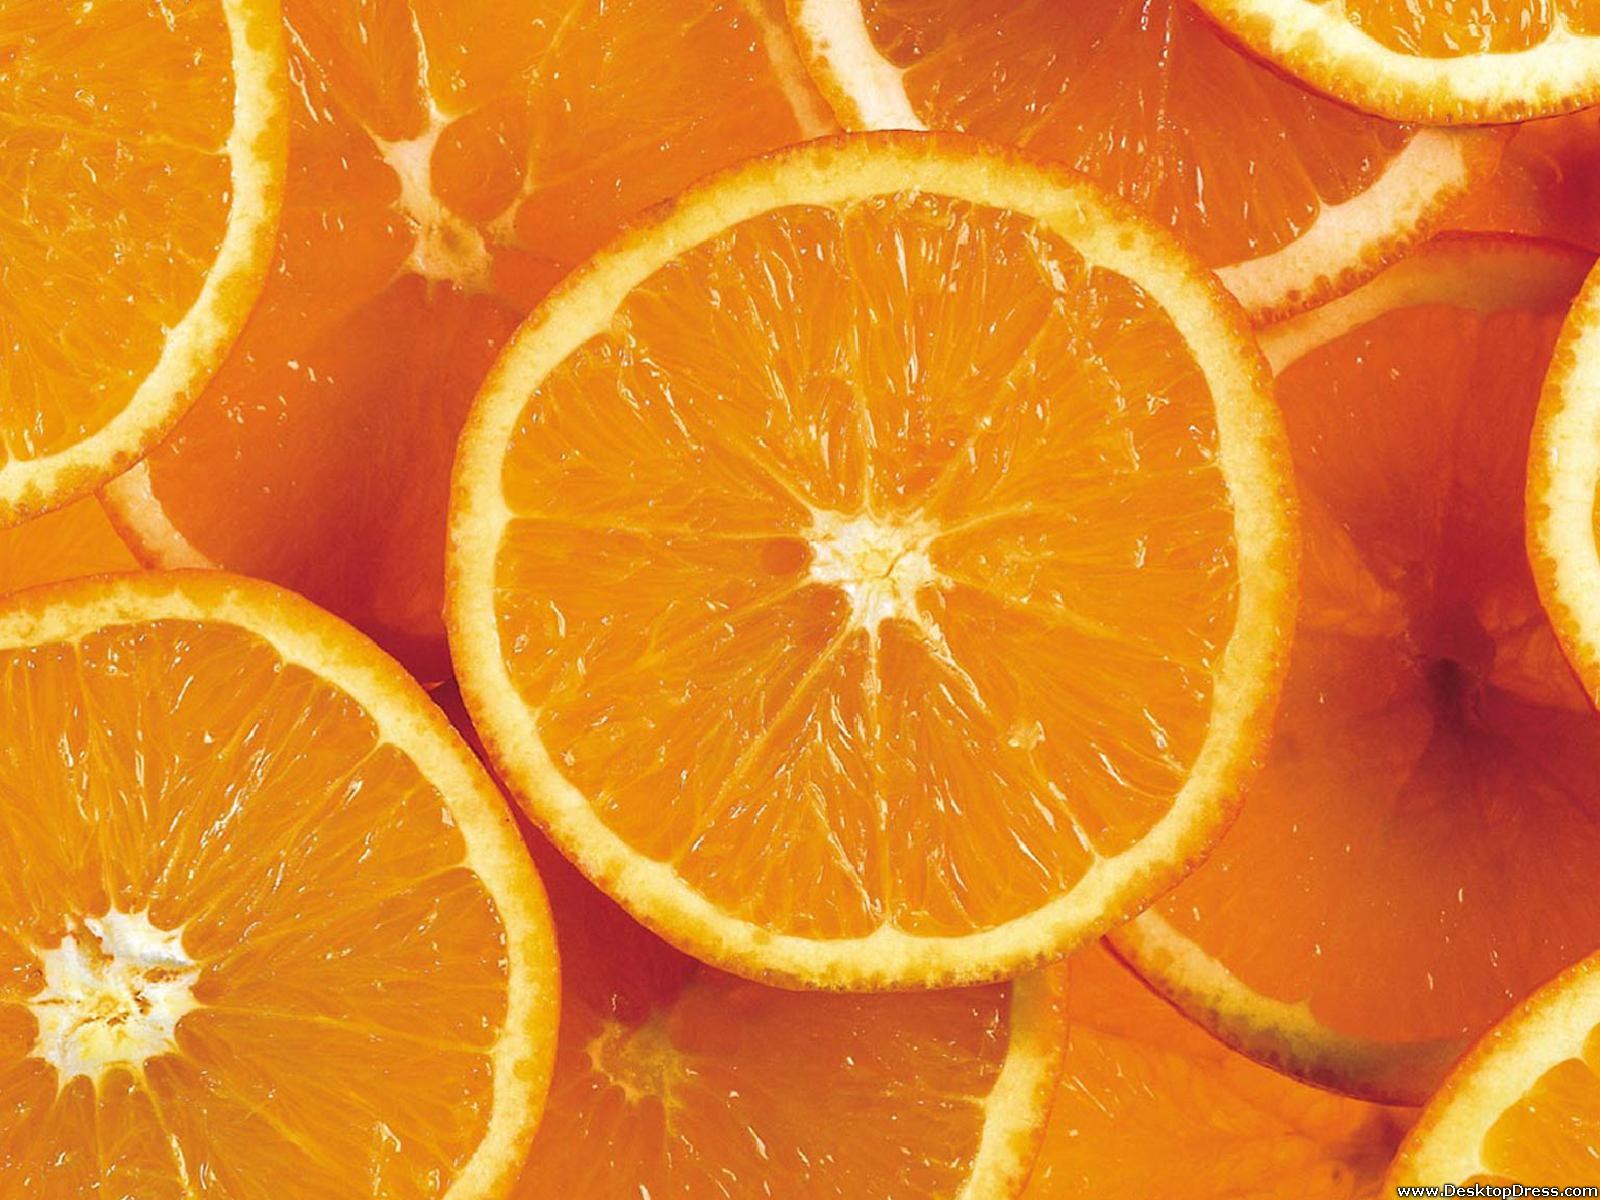 Desktop Wallpapers » Other Backgrounds » Fresh Oranges » www ...